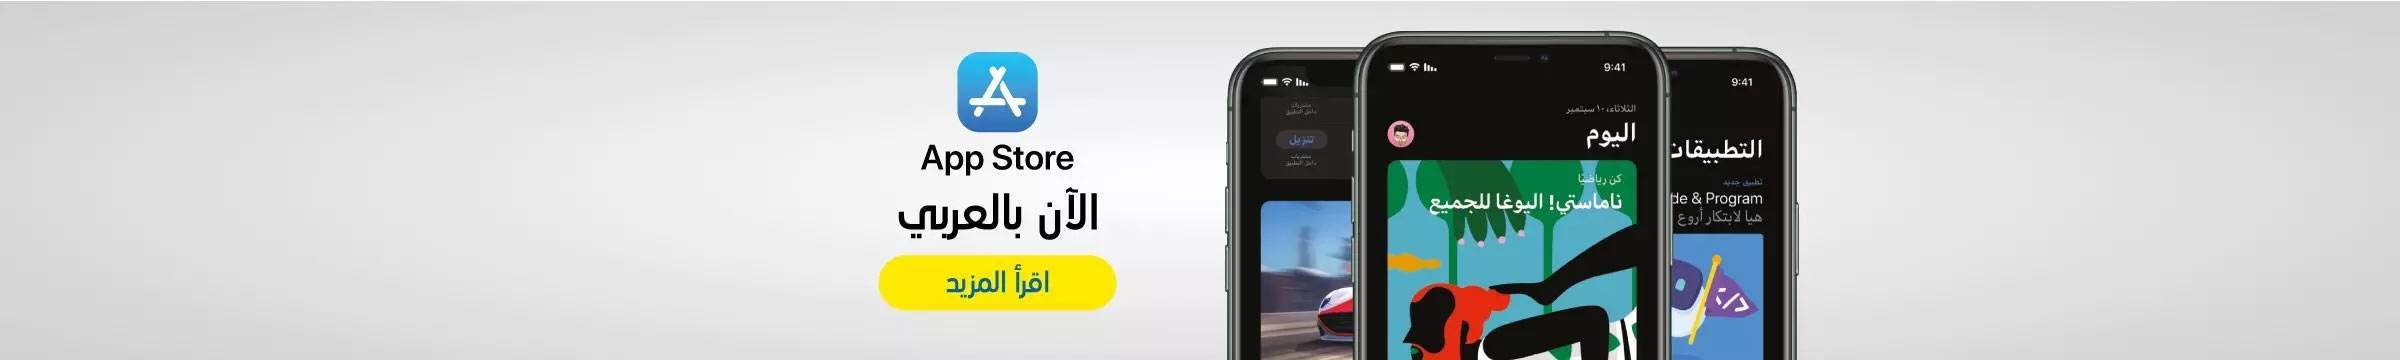 App Store Arabic